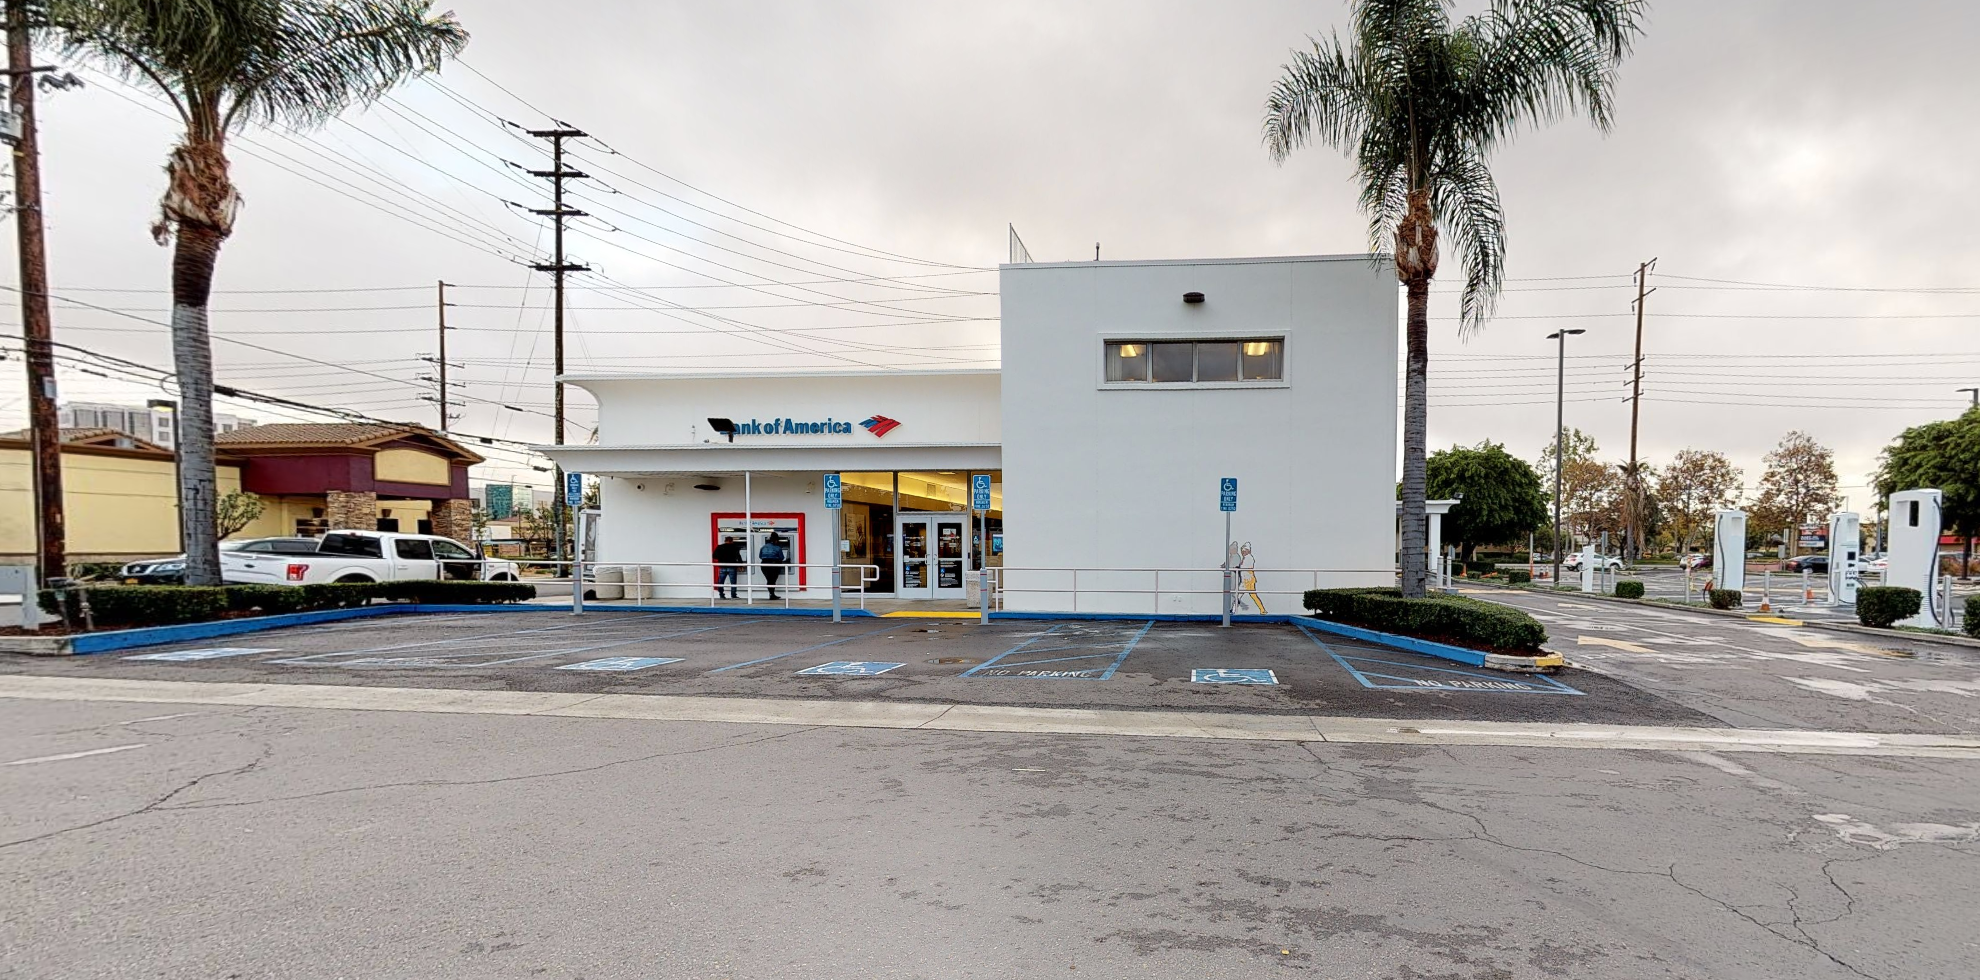 Bank of America financial center with drive-thru ATM | 2127 E 17th St, Santa Ana, CA 92705